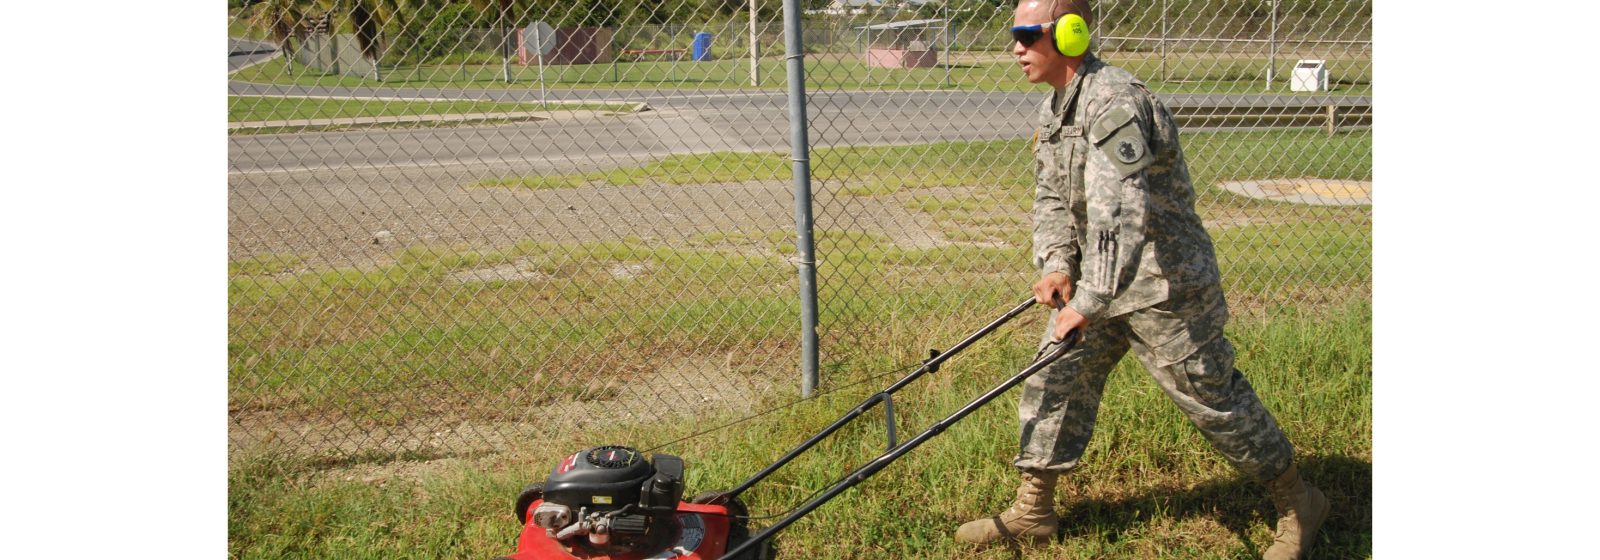 Amerikaanse soldaat onderhoudt groen